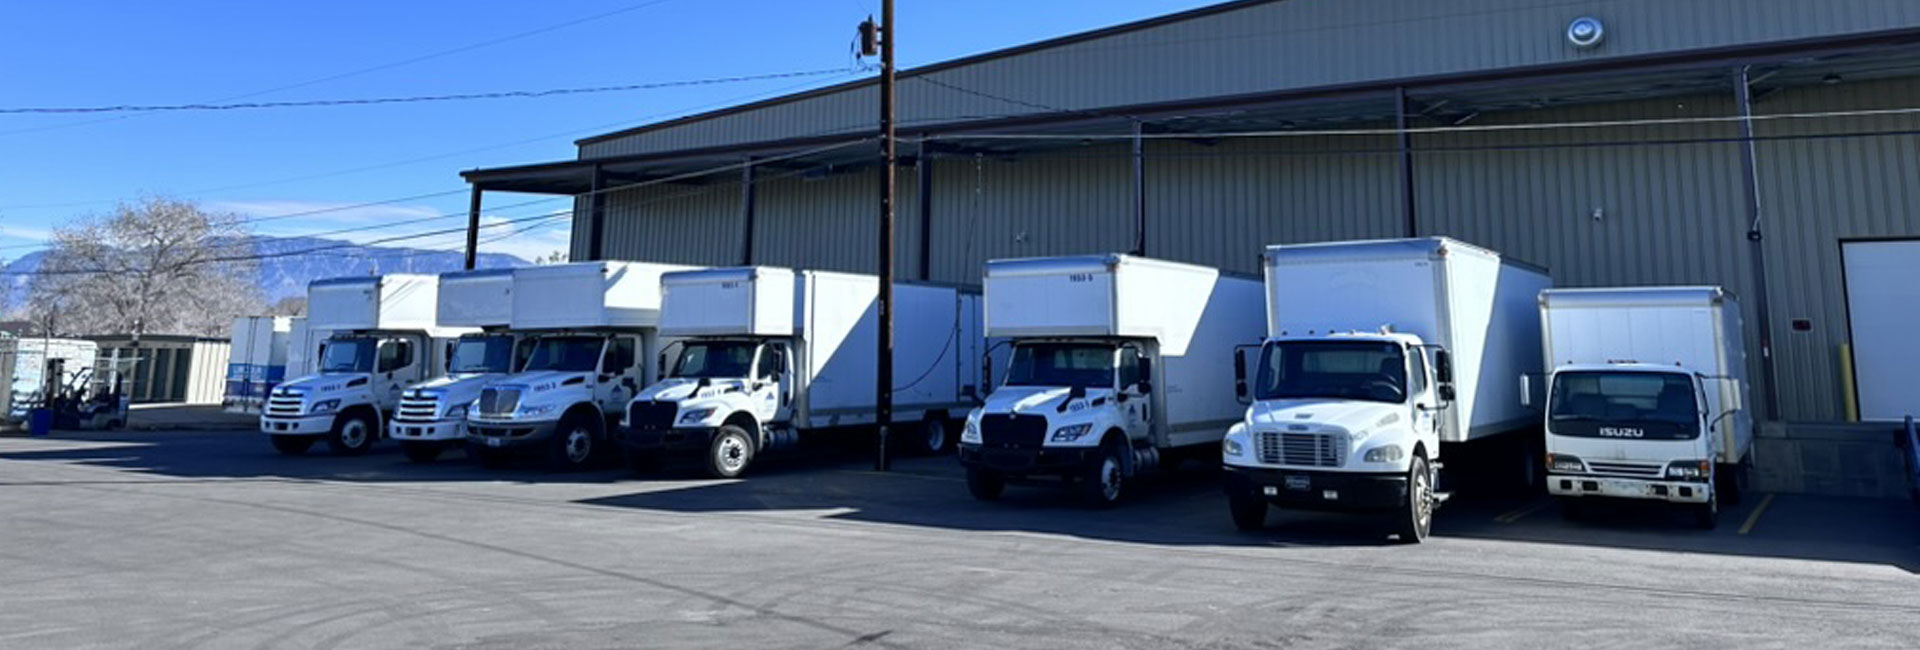 Apaca trucks lined up near warehouse